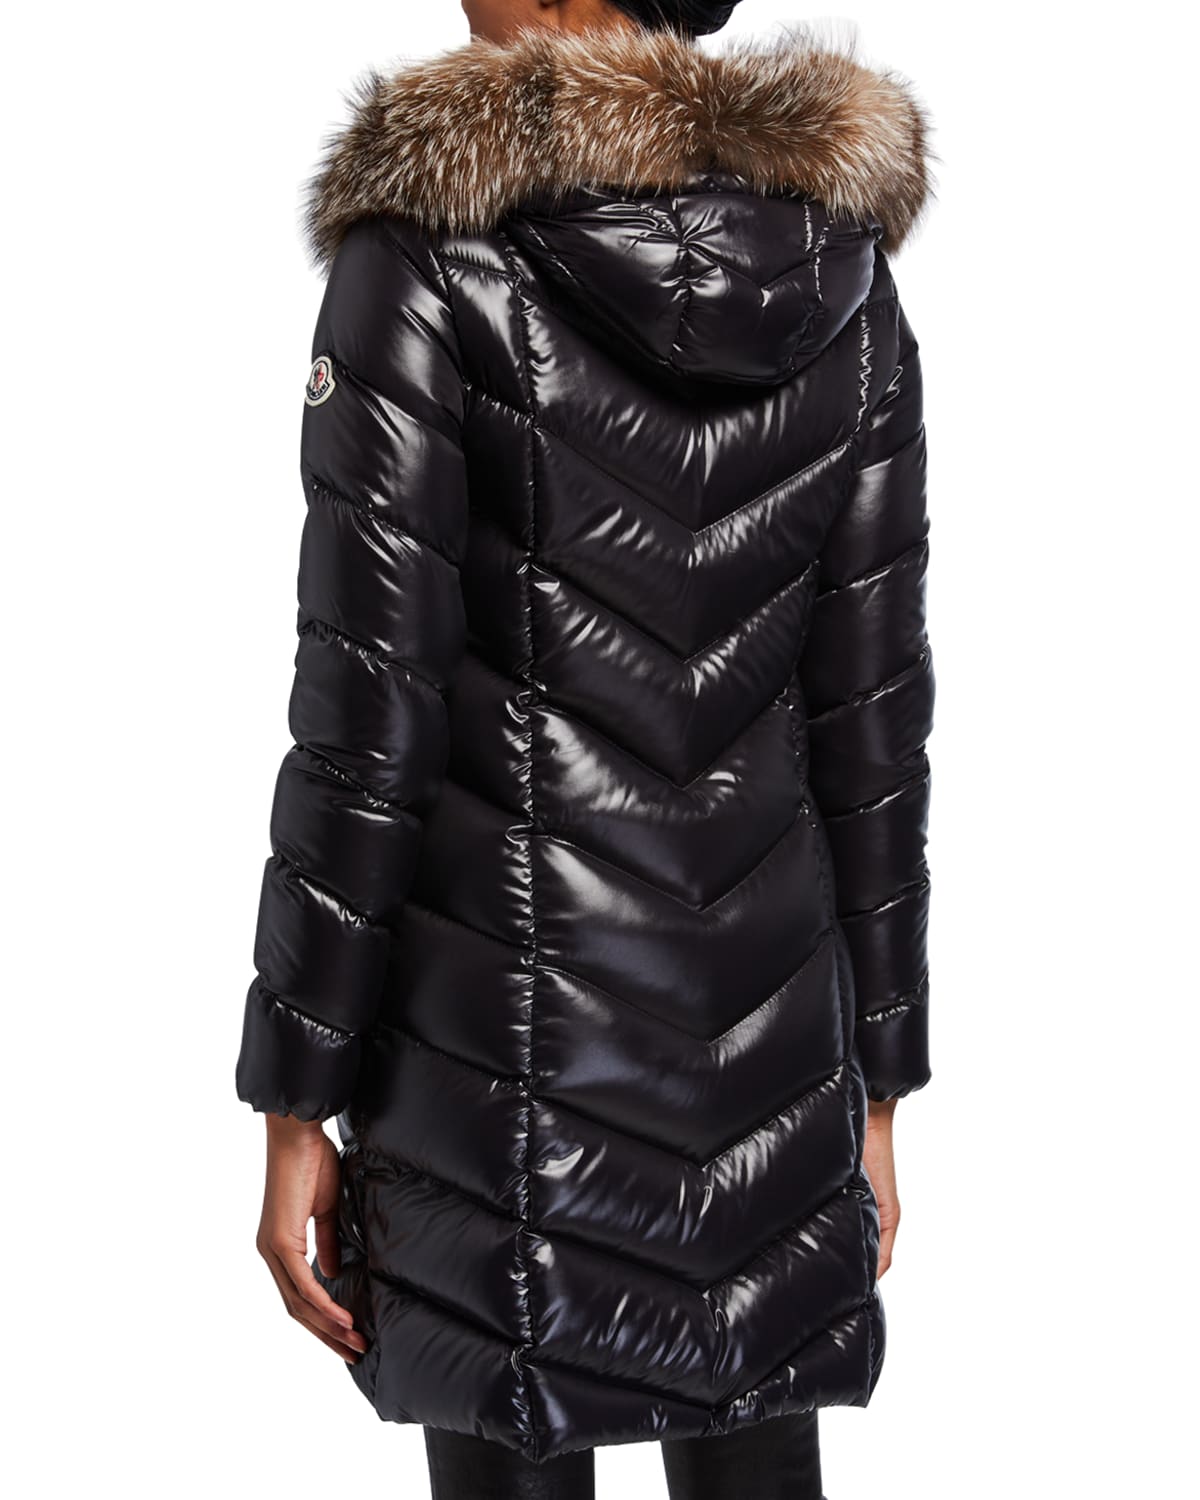 moncler coat with fur